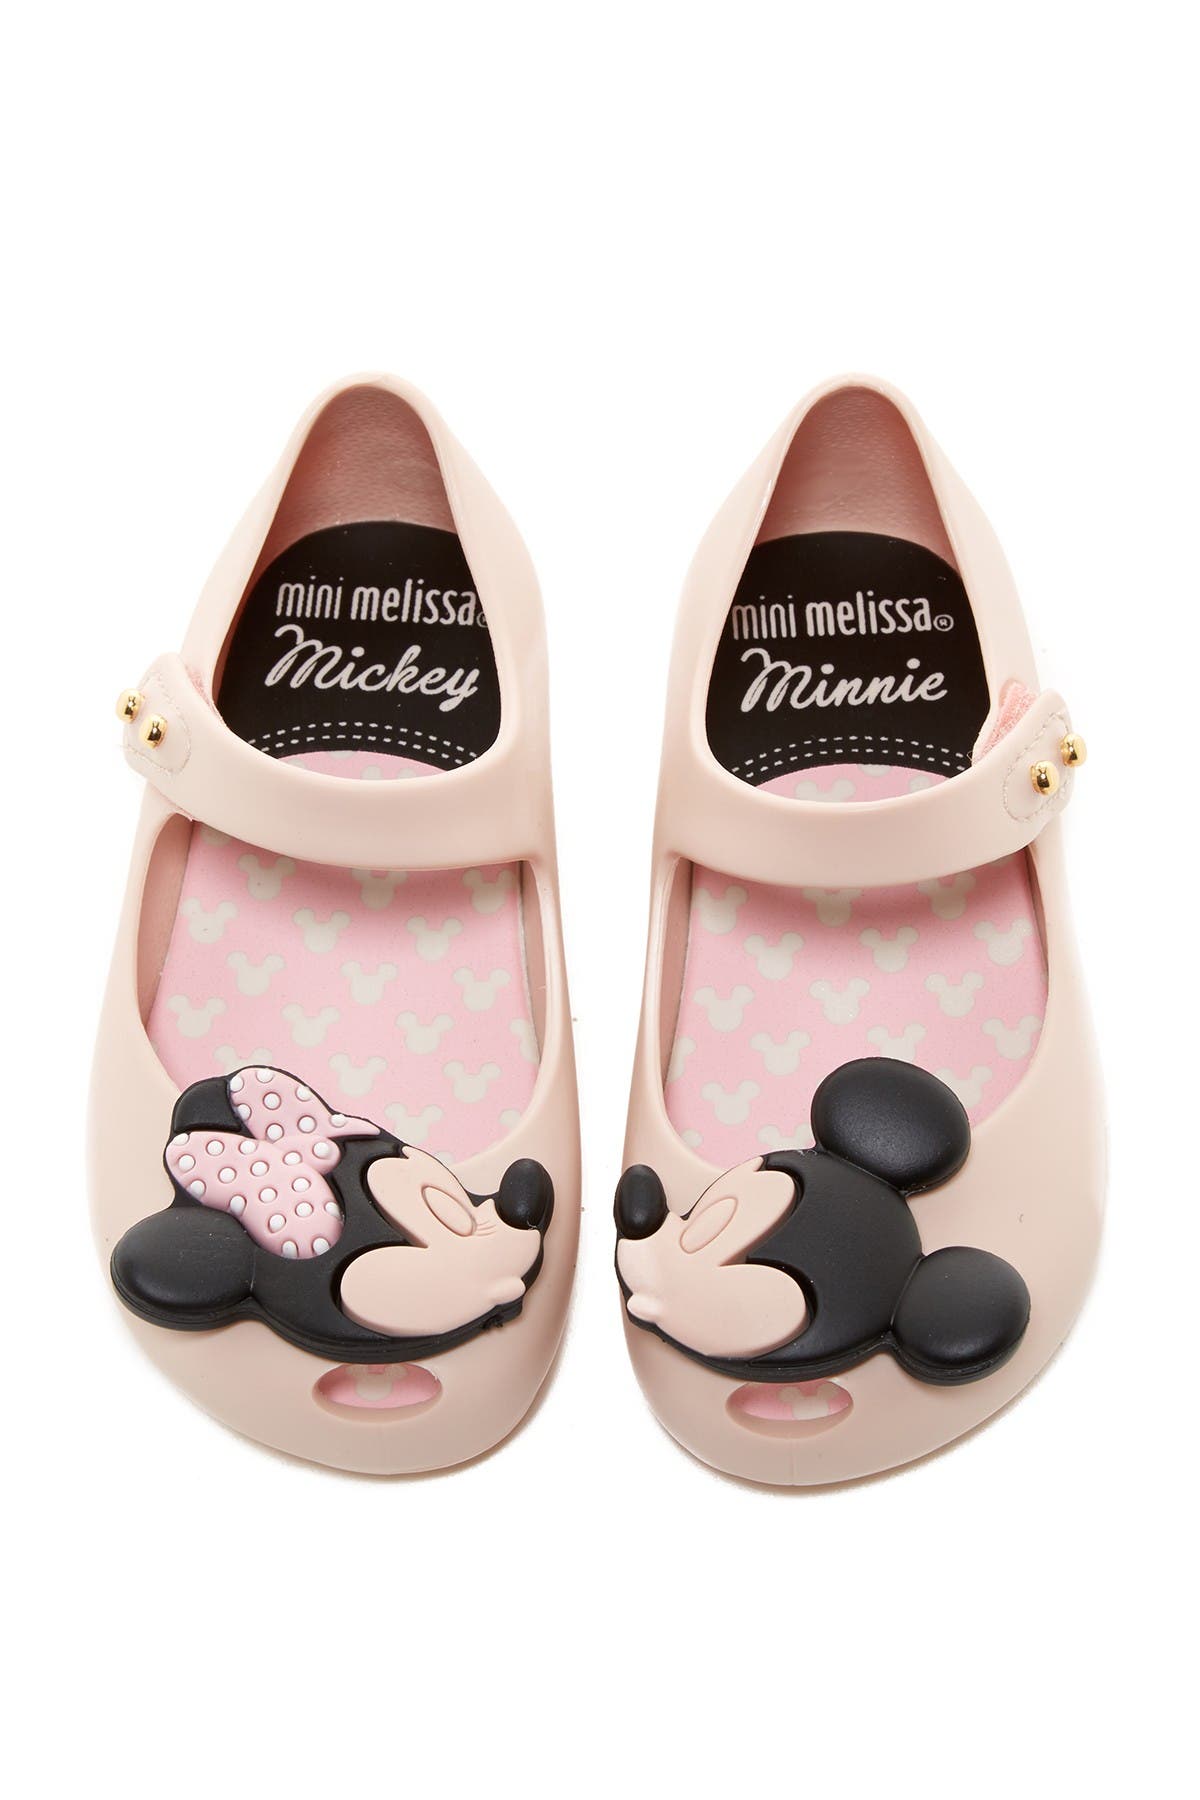 mini melissa minnie mouse shoes